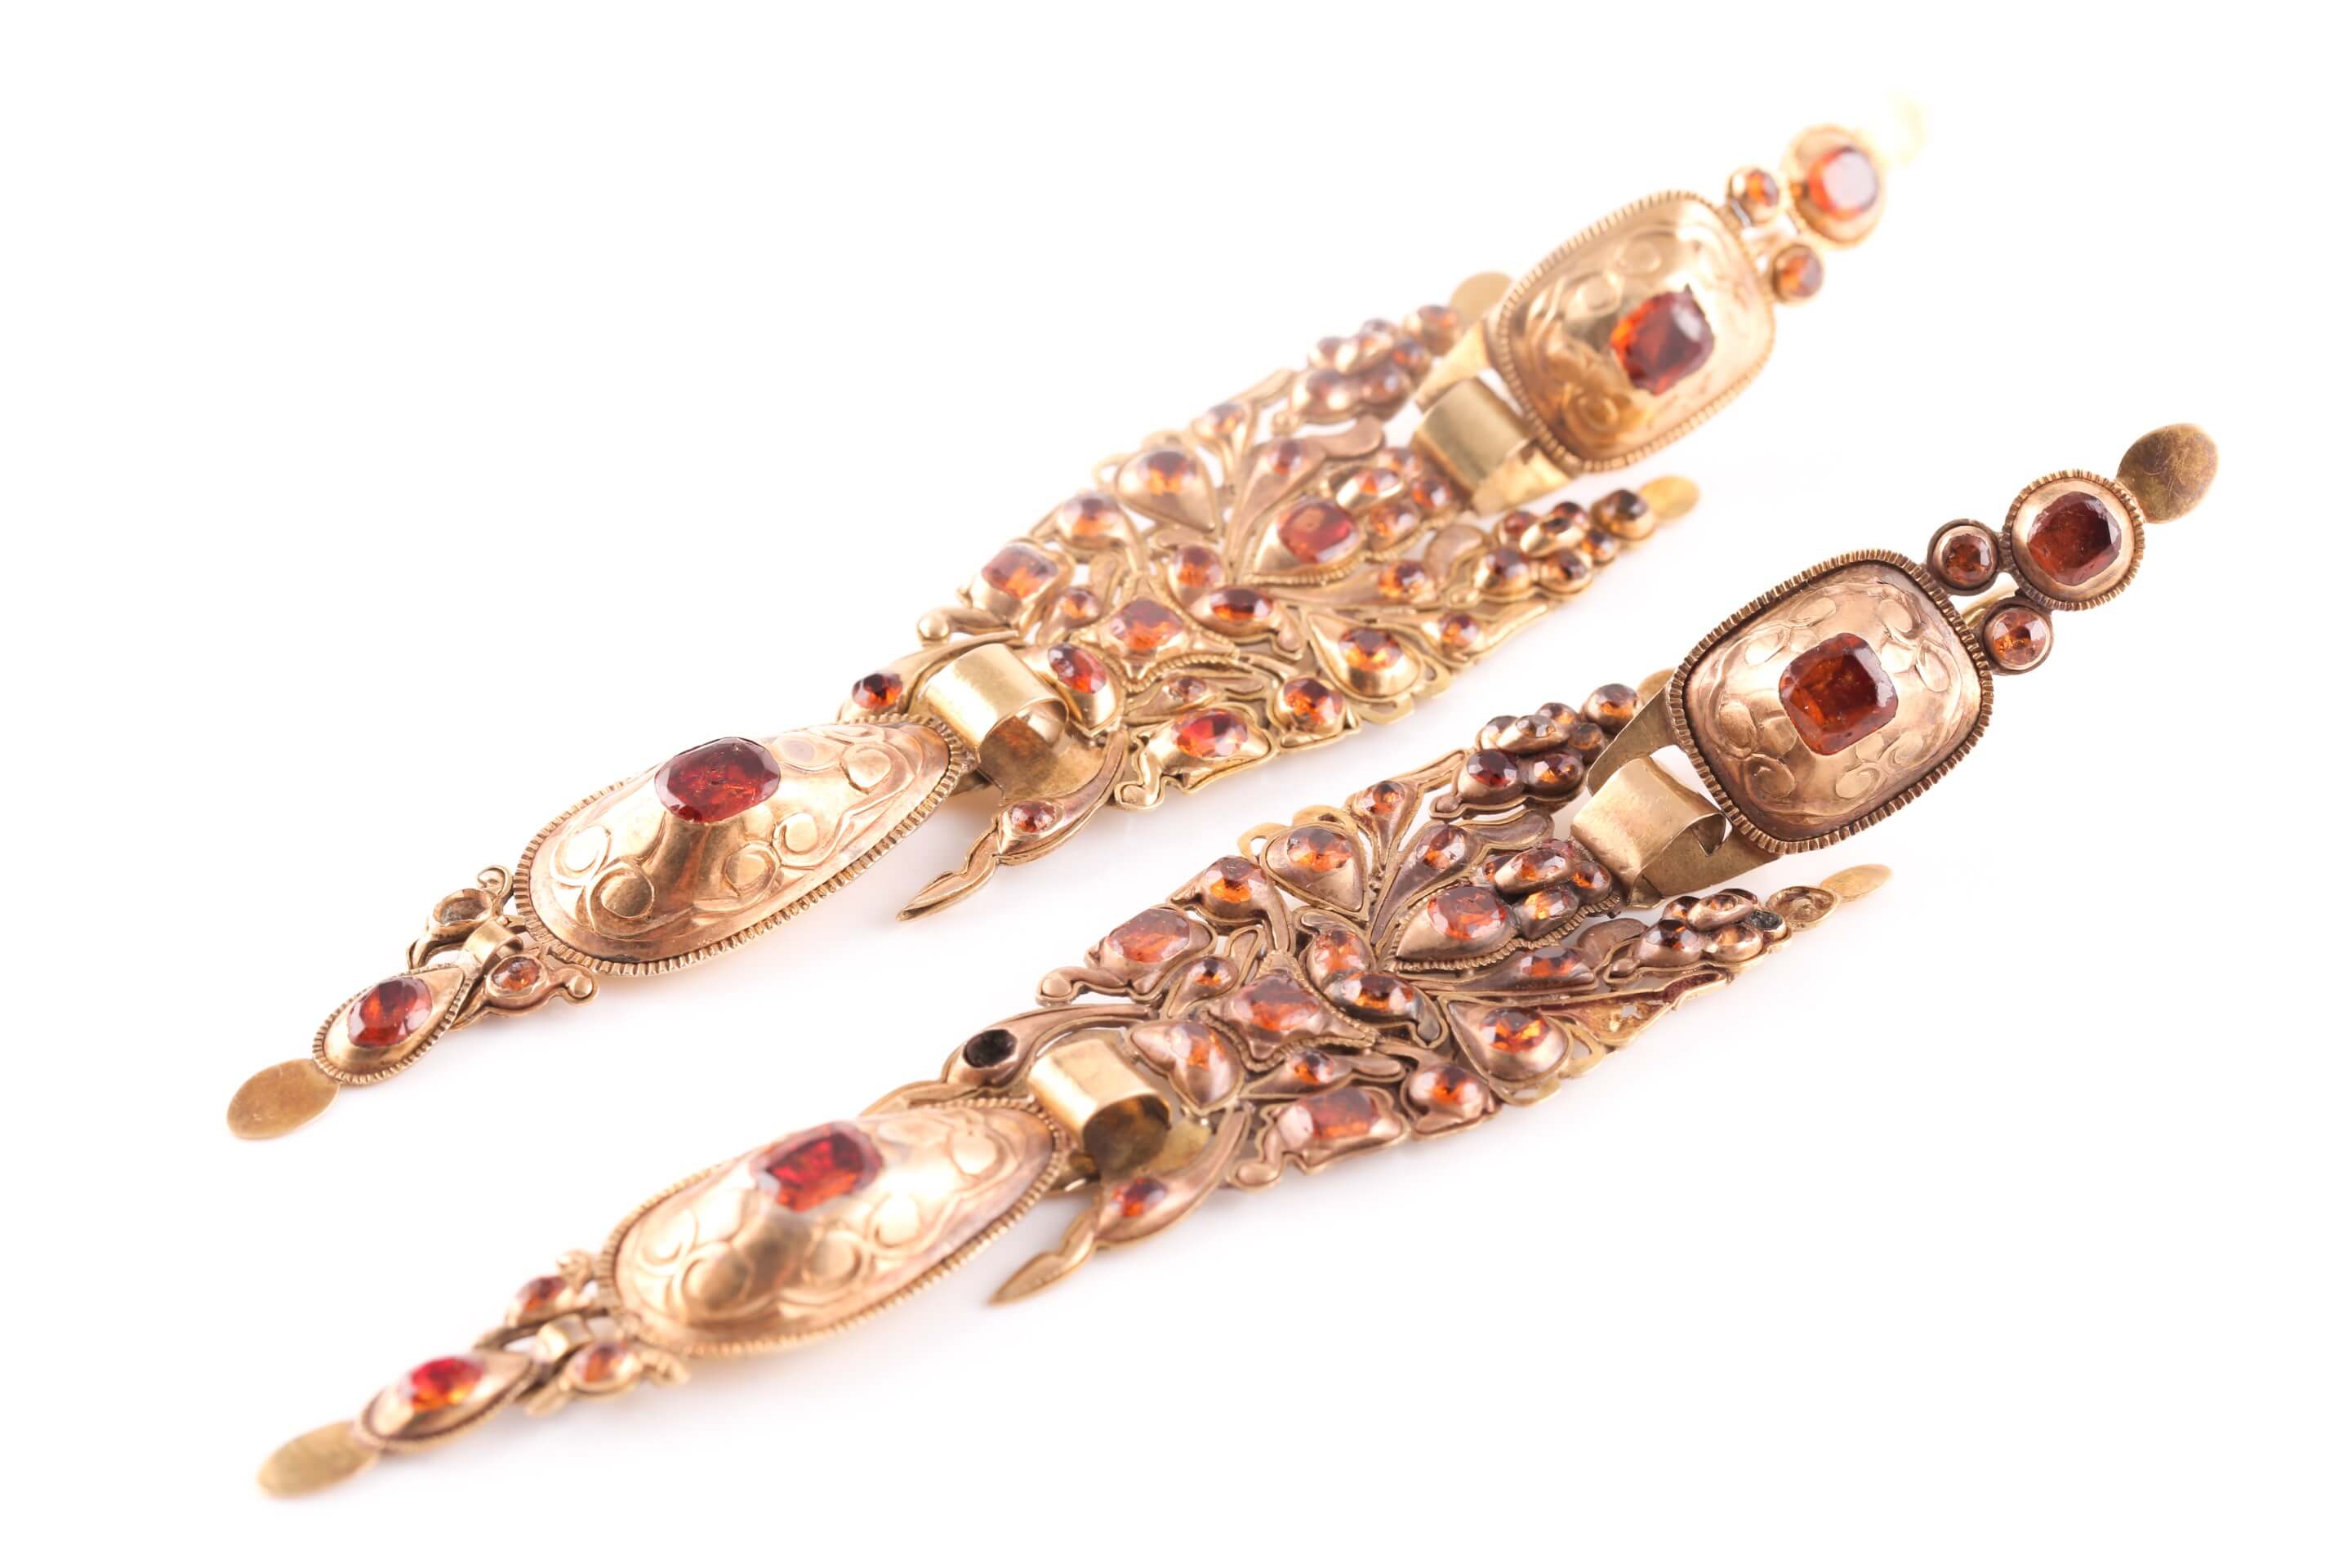 A pair of Spanish hessonite garnet earrings